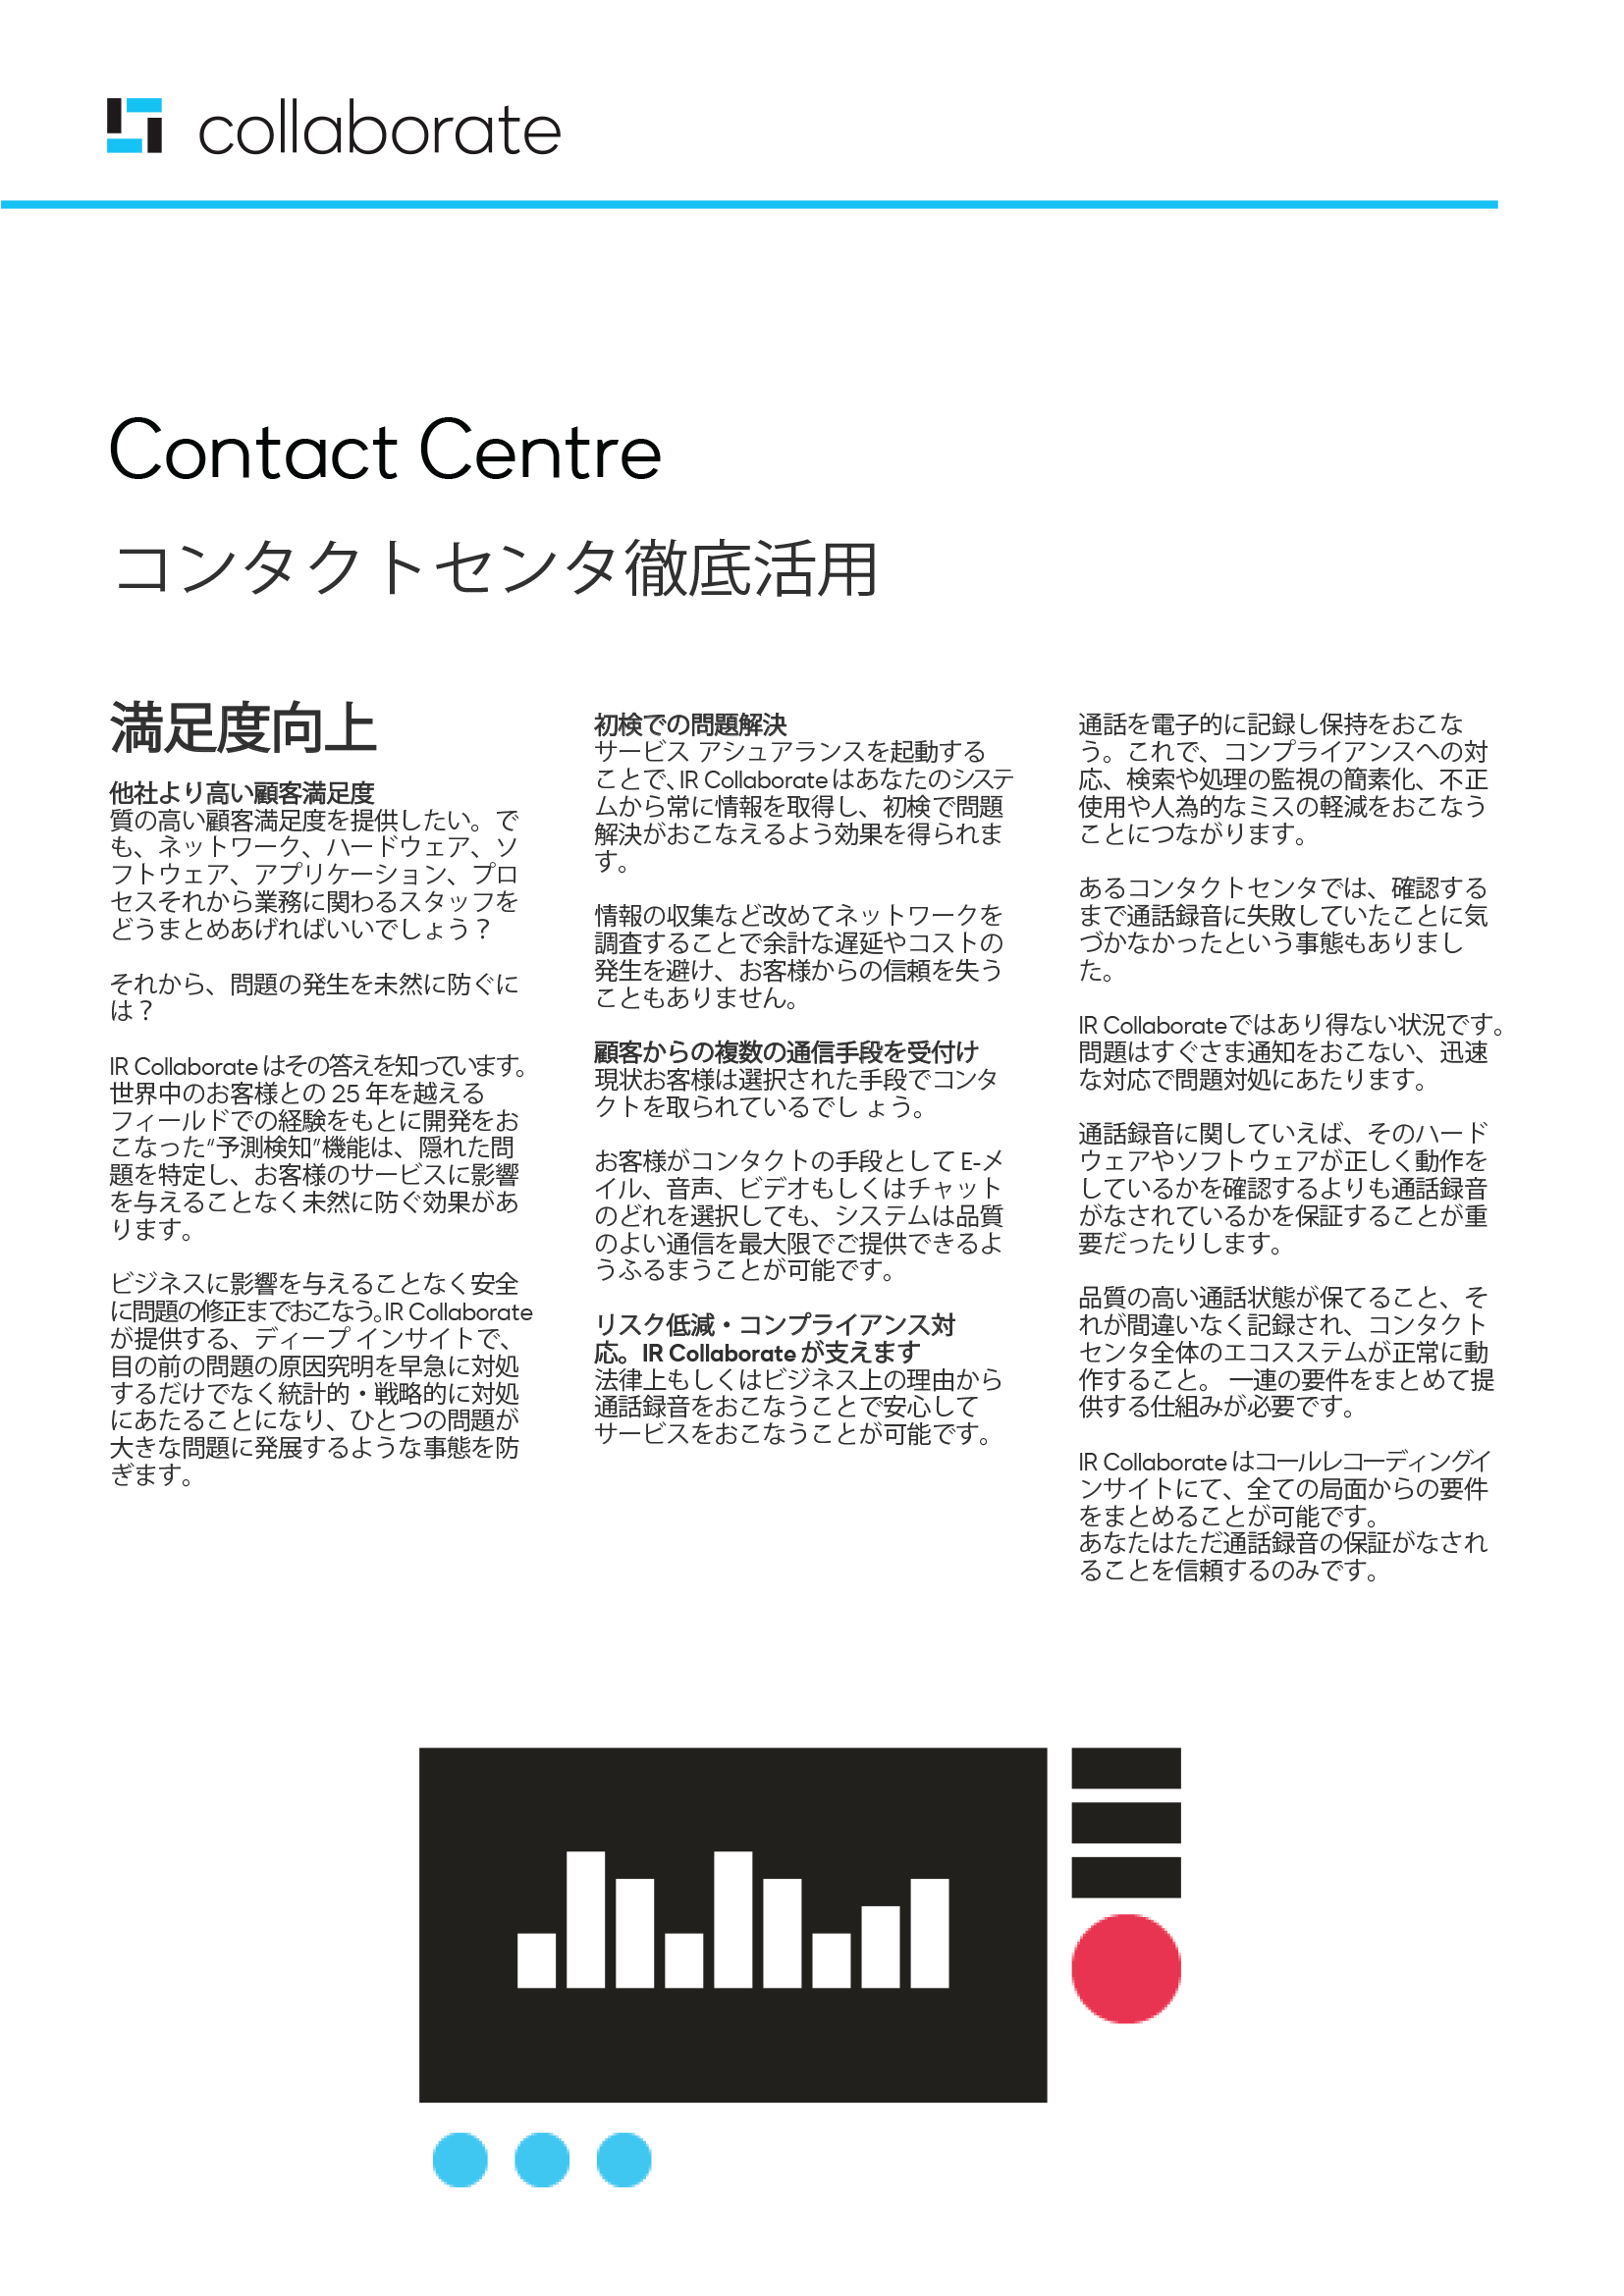 R-Collaborate-Prognosis-for-Contact-Center-JPN-v2-1